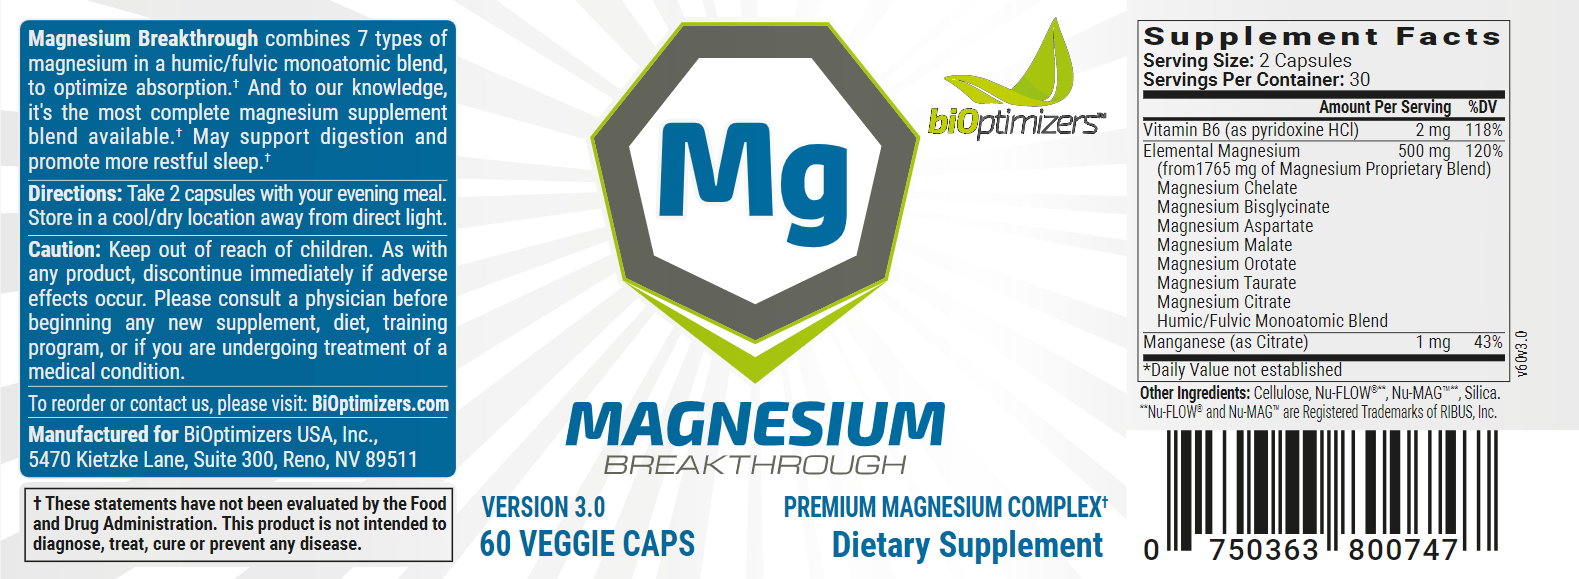 3 bottles of Magnesium